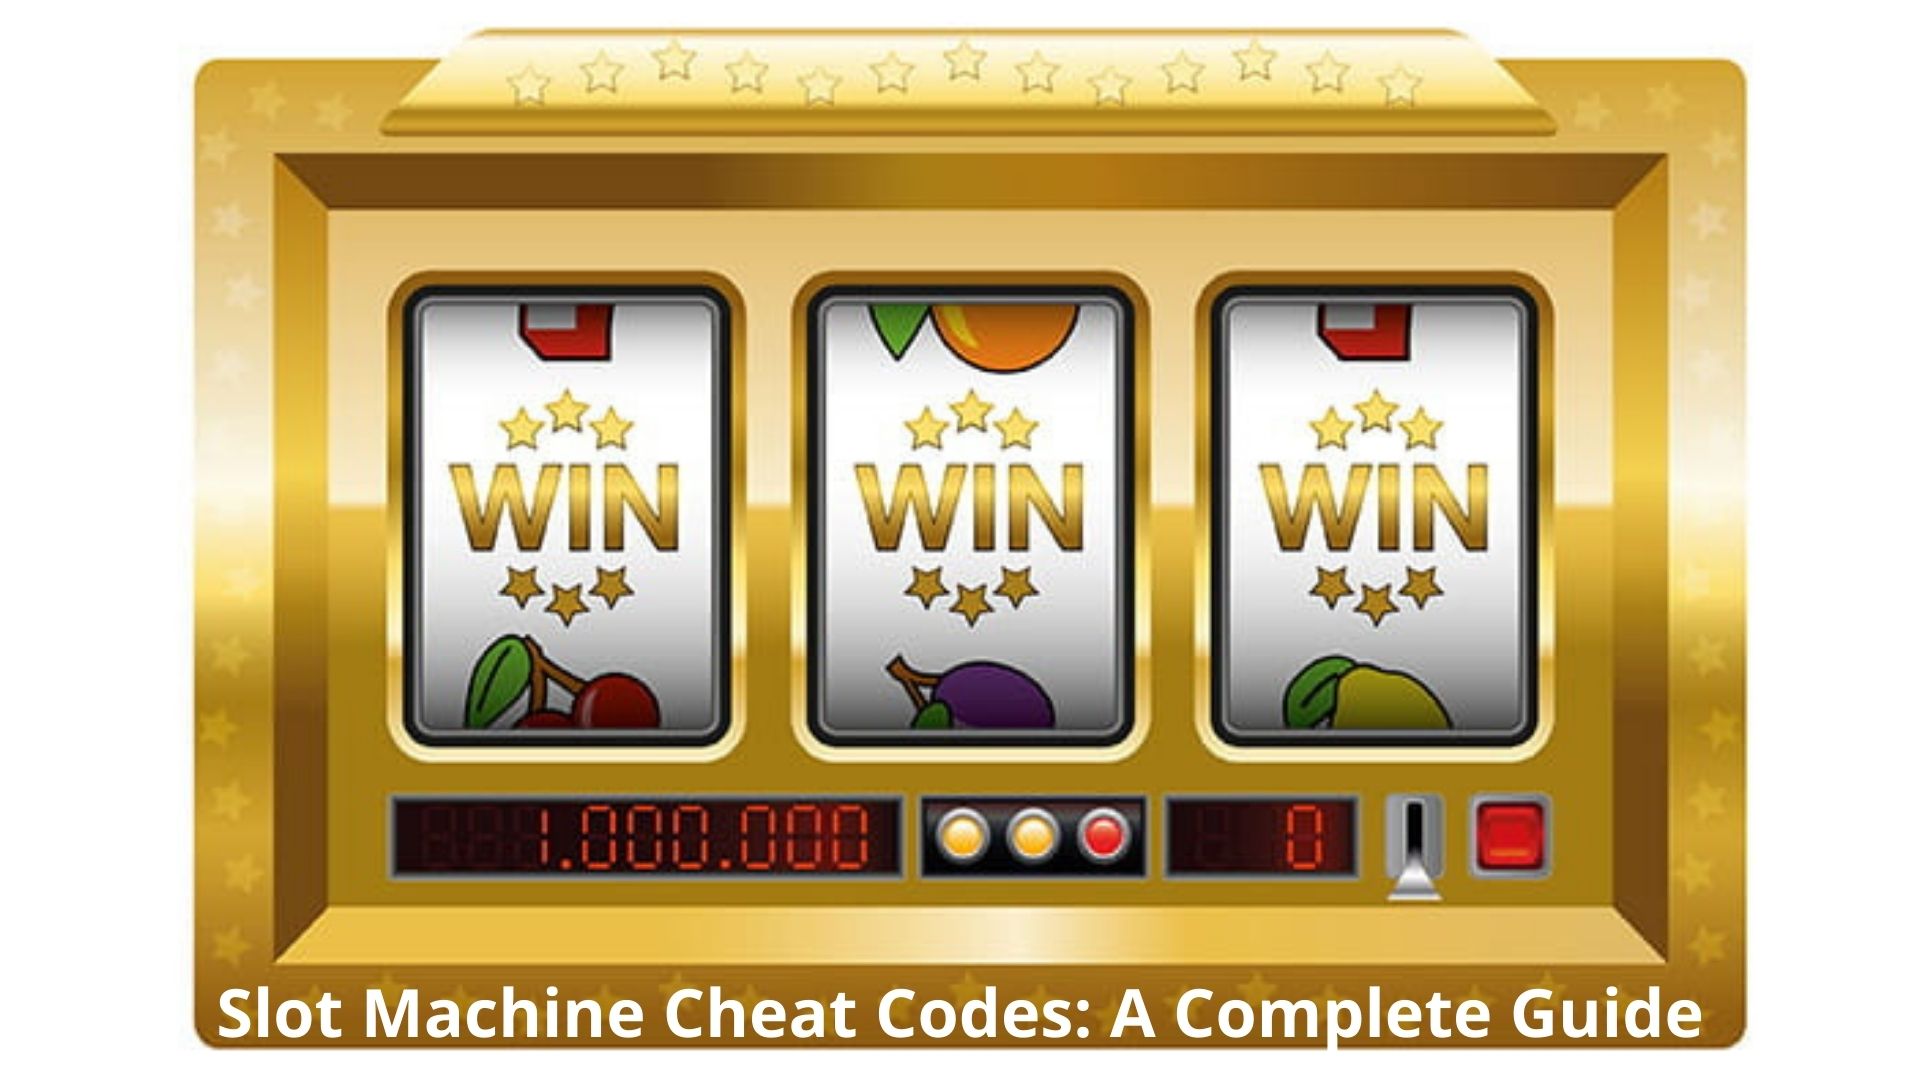 Slot Machine Cheat Codes